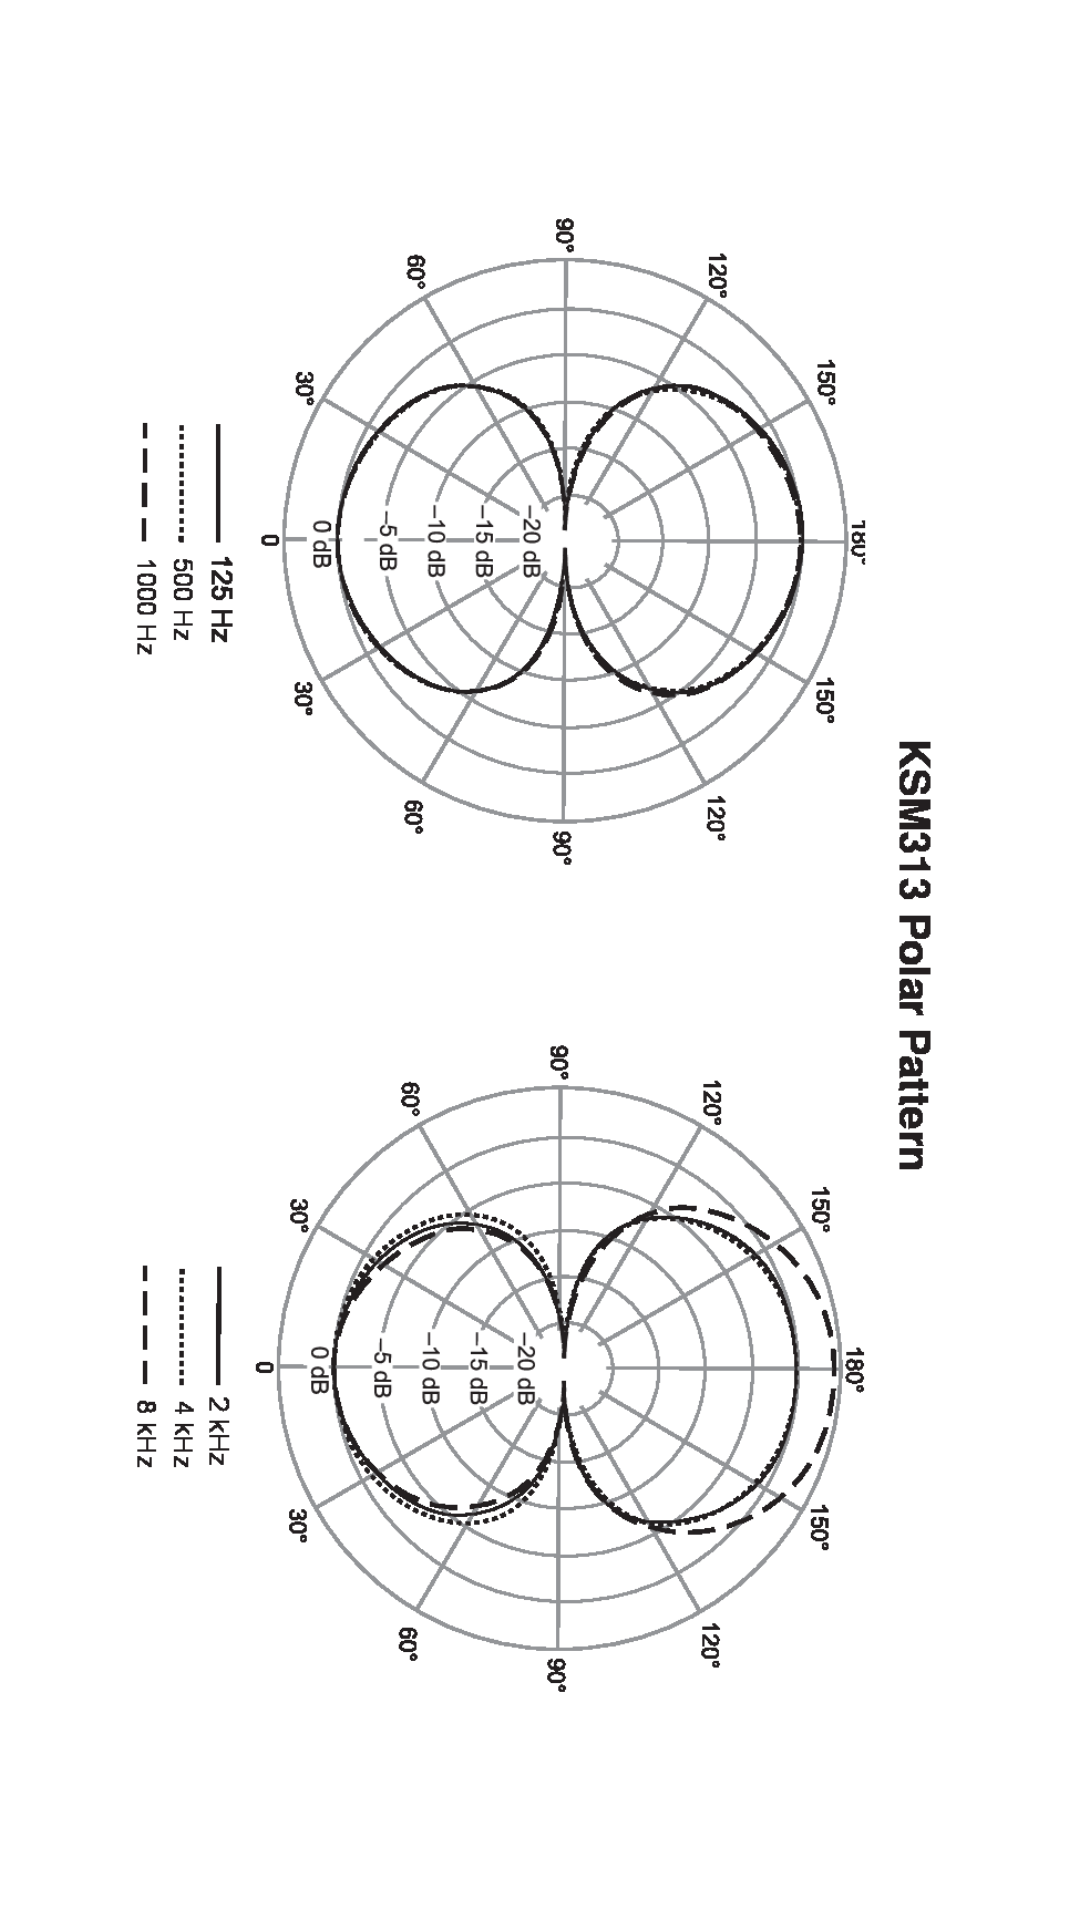 Shure ksm313 manual KSM313 Polar Pattern, 500 Hz 1000 Hz, 8 kHz, 4 kHz, 2 kHz 